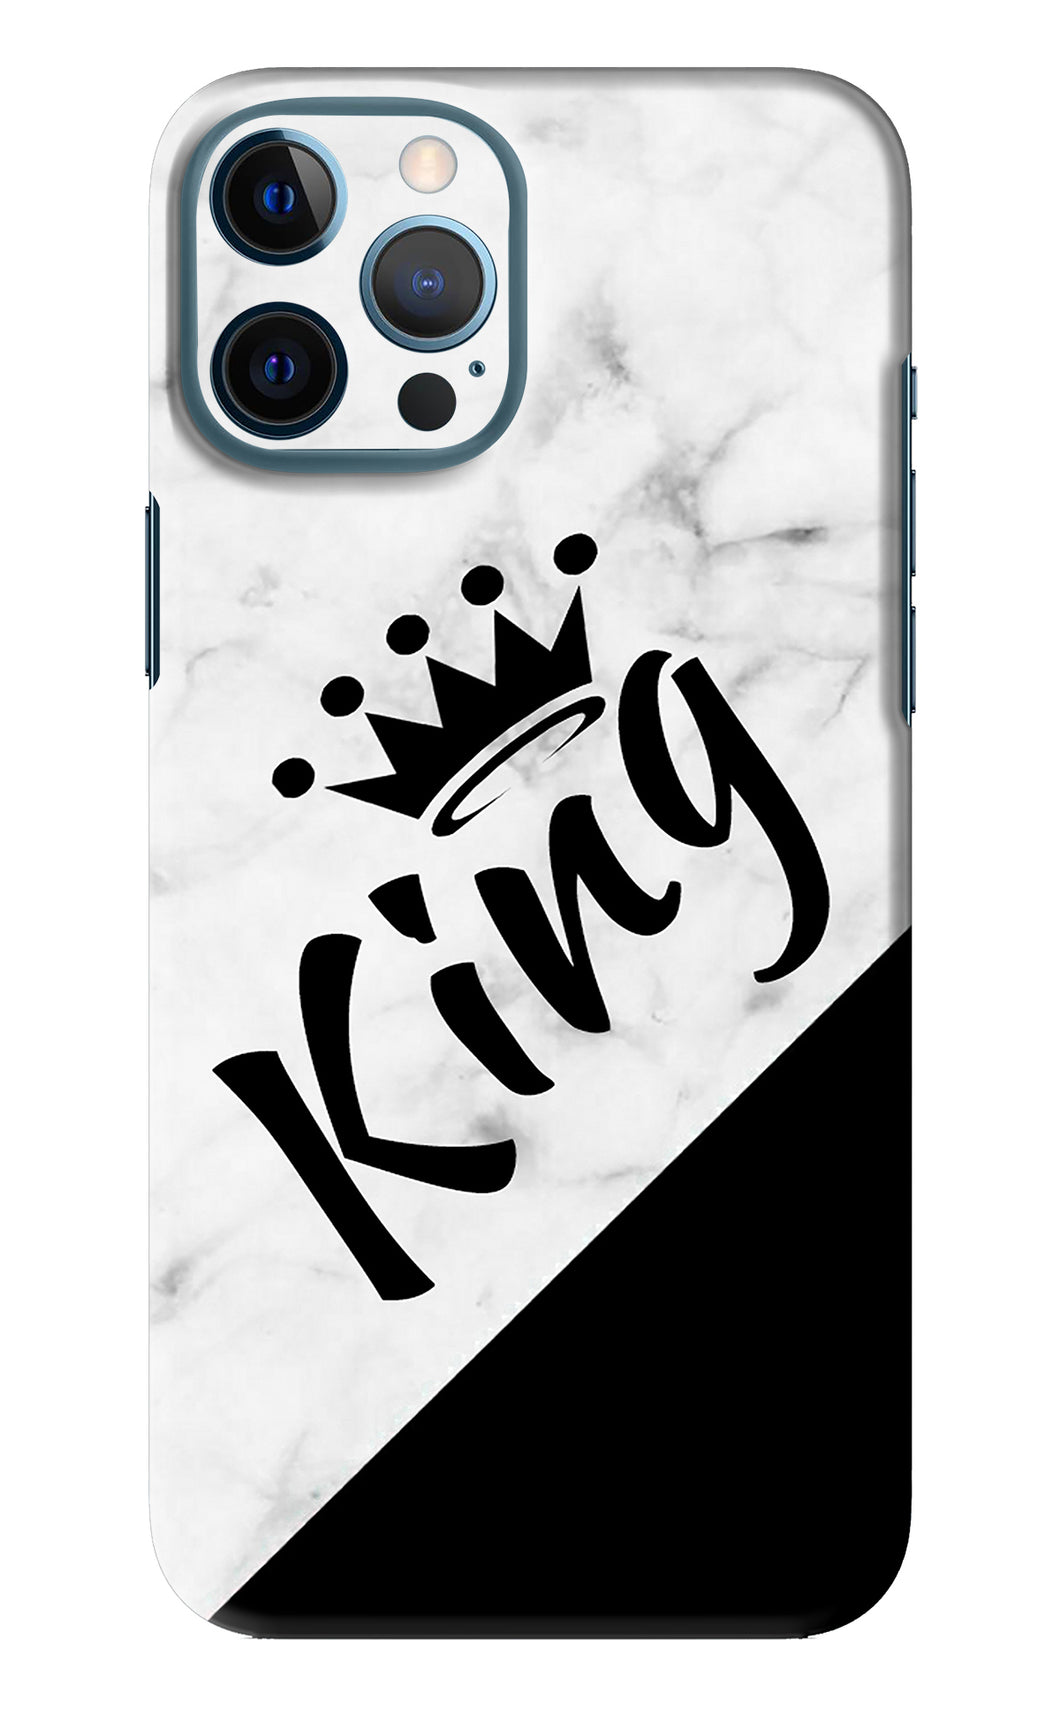 King iPhone 12 Pro Max Back Skin Wrap